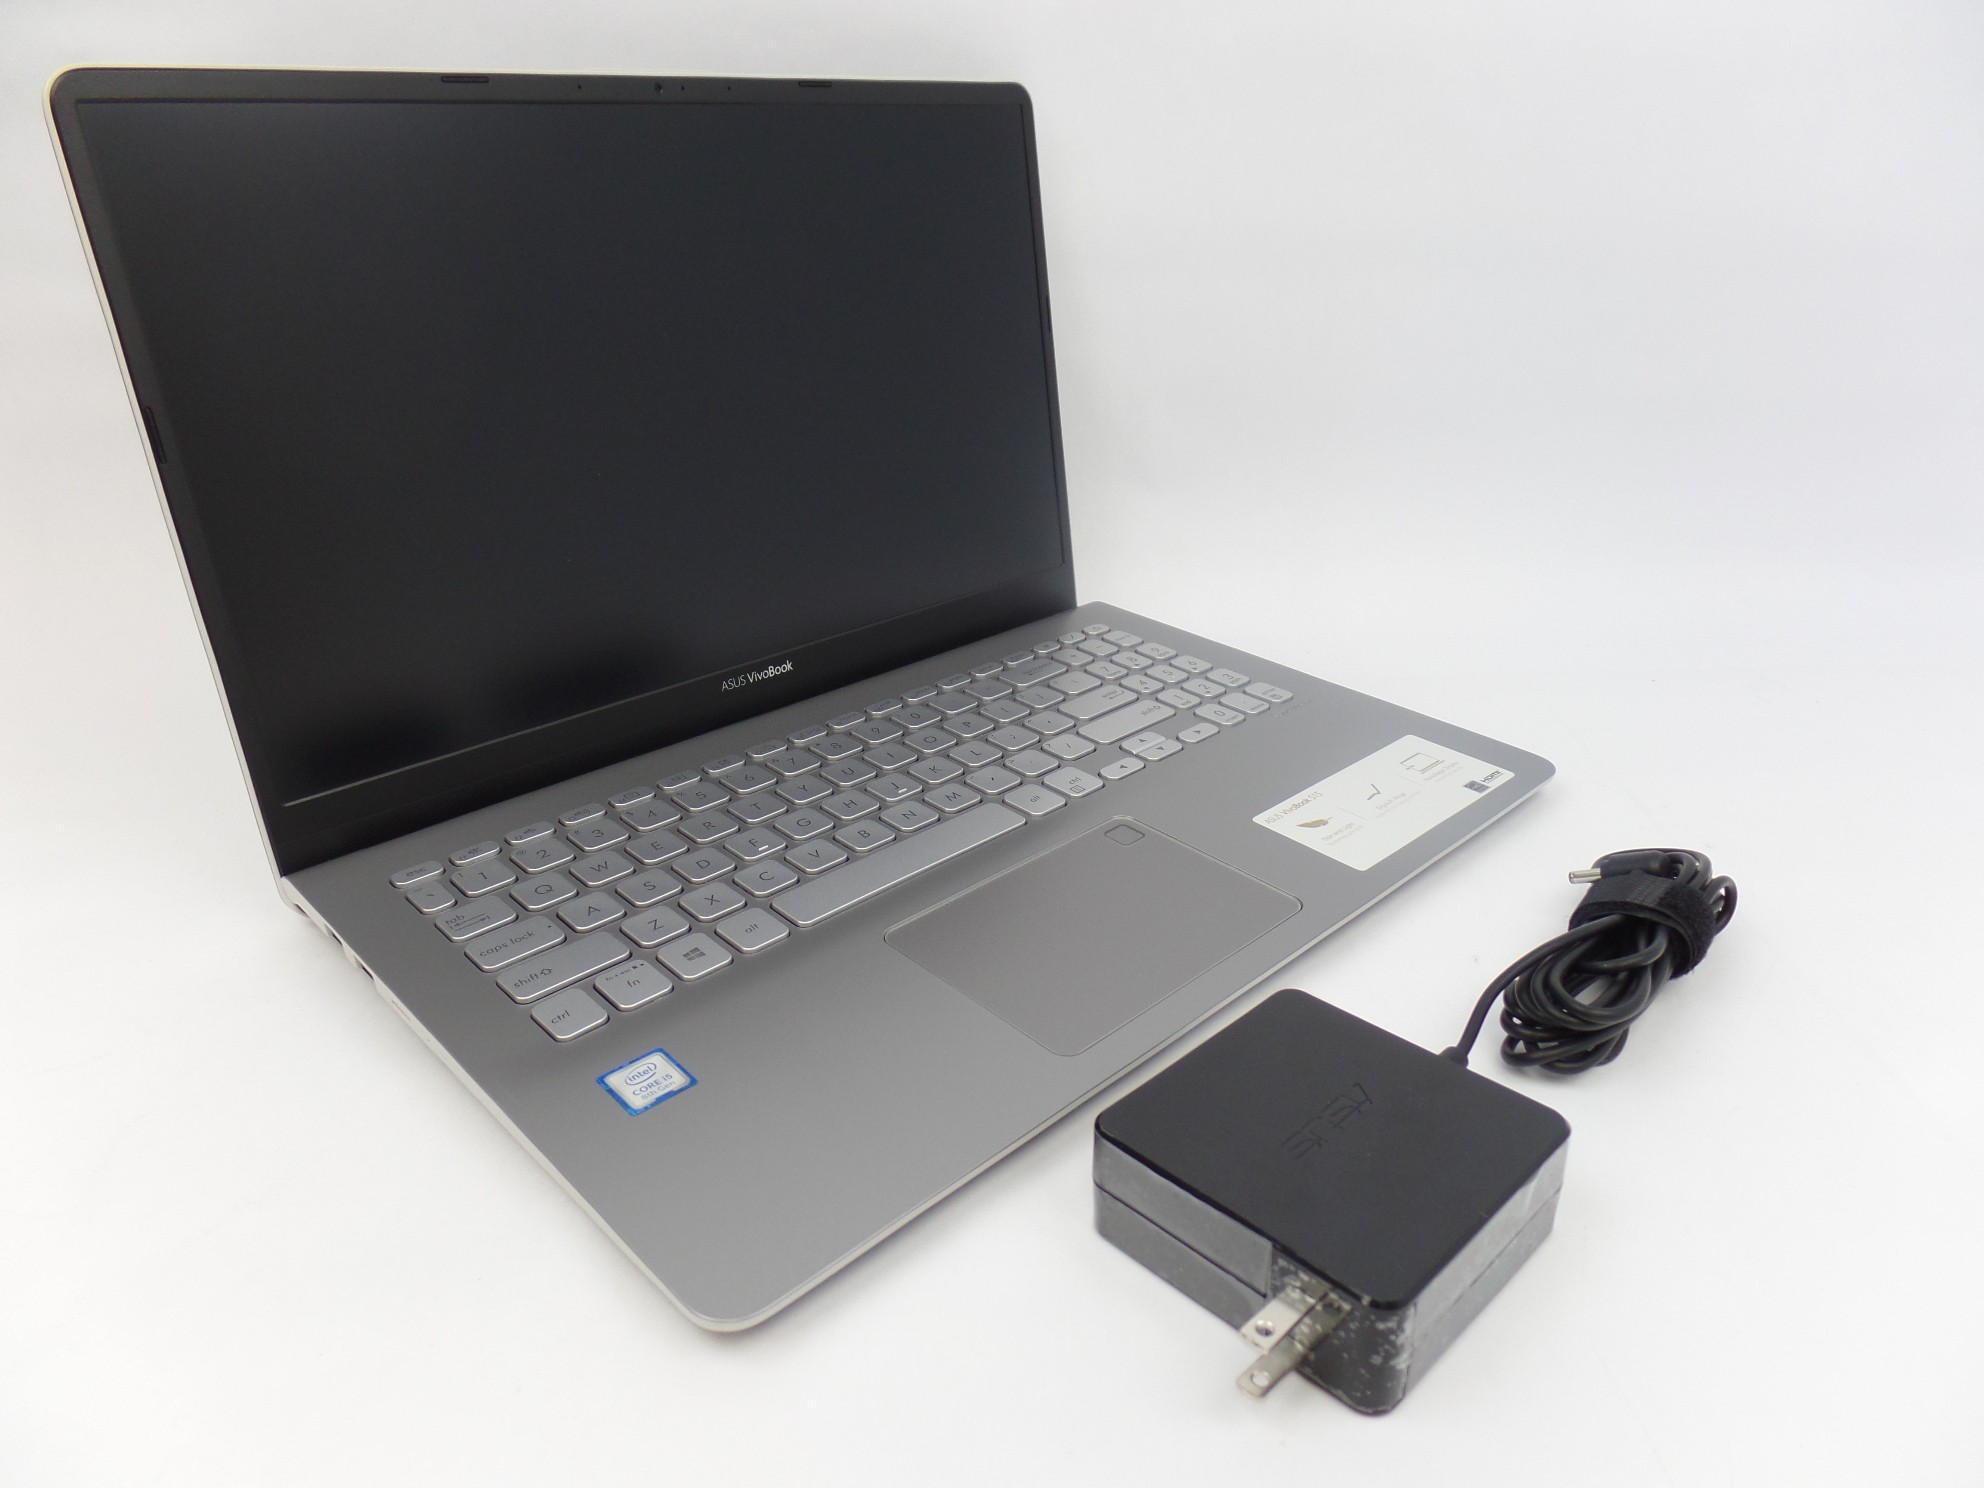 ASUS VivoBook S530UA-DB51 15.6" FHD i5-8250U 1.6GHz 8GB 256GB SSD W10H Laptop SD